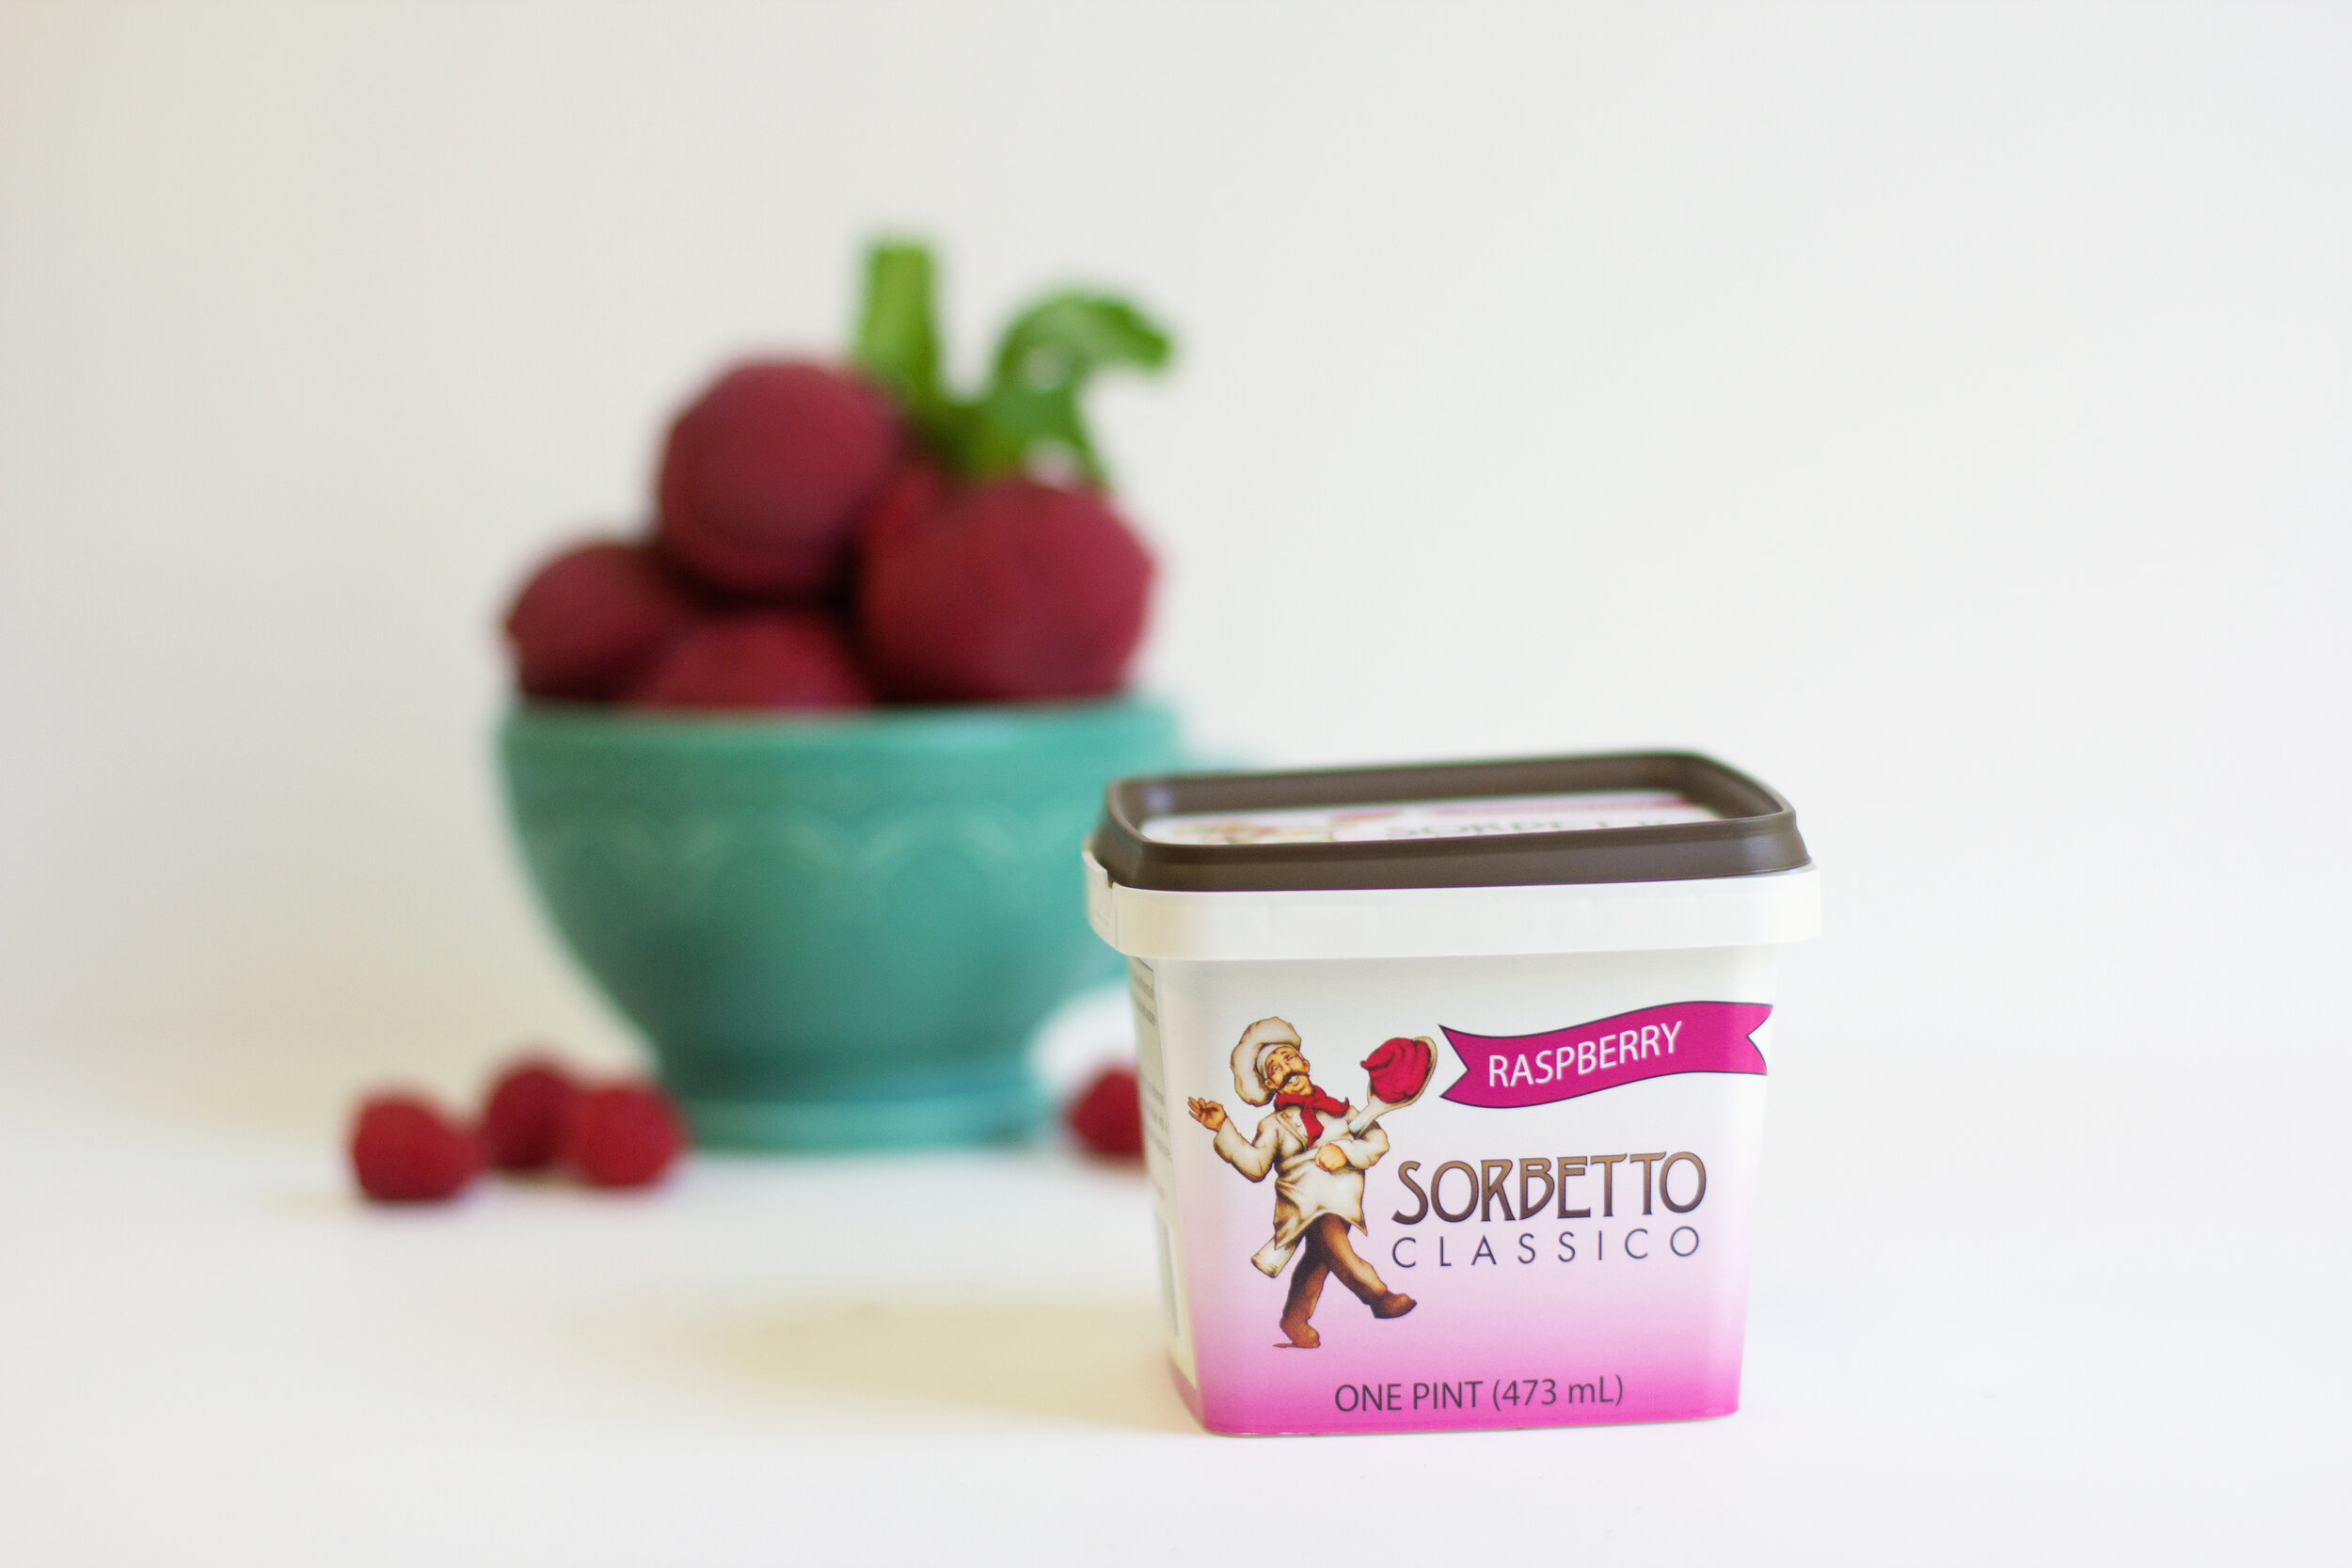 Raspberry Sorbet from Sorbetto Classico